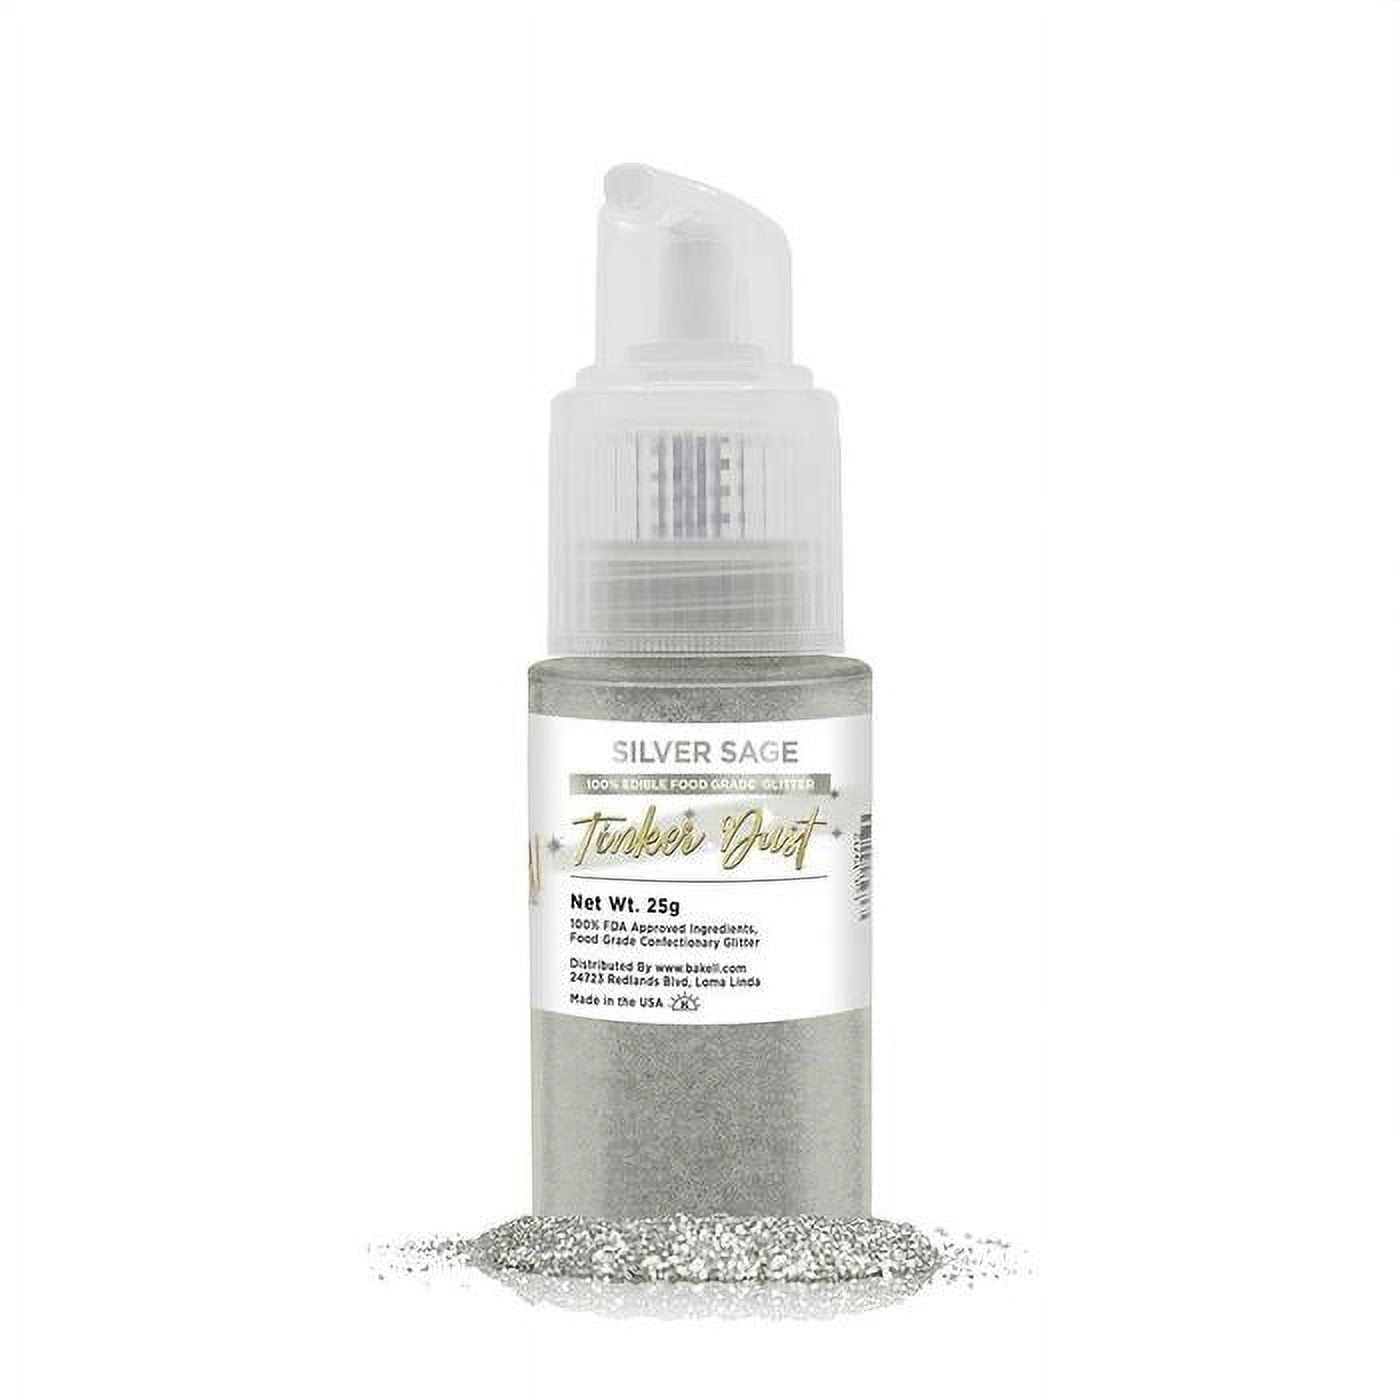 Silver Edible Glitter Spray Pump - The Peppermill